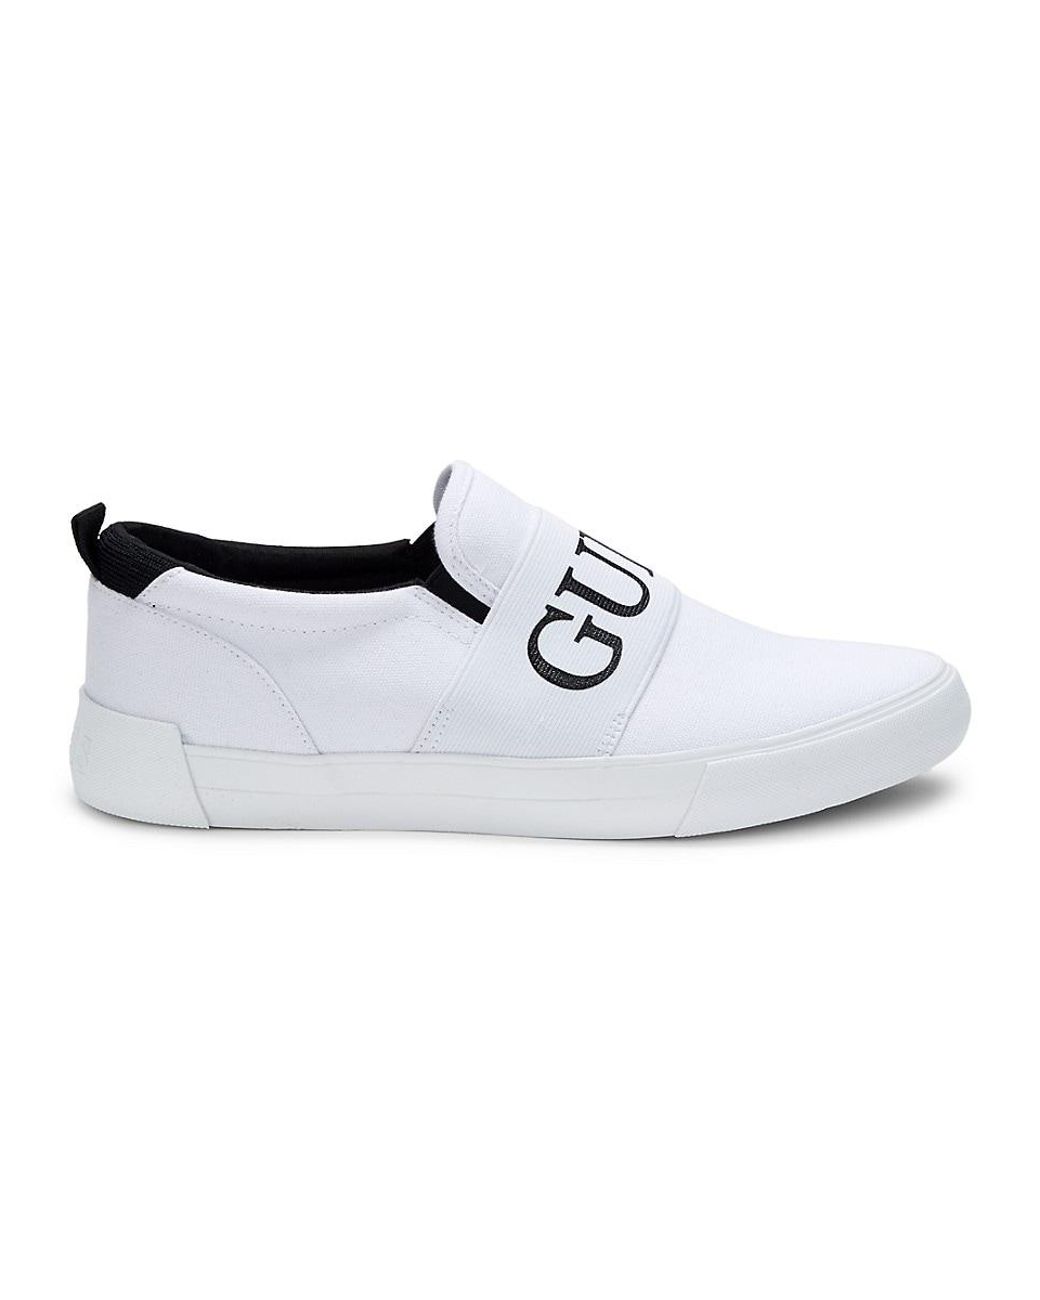 Guess Logo Slip-on Sneakers in White for Men | Lyst